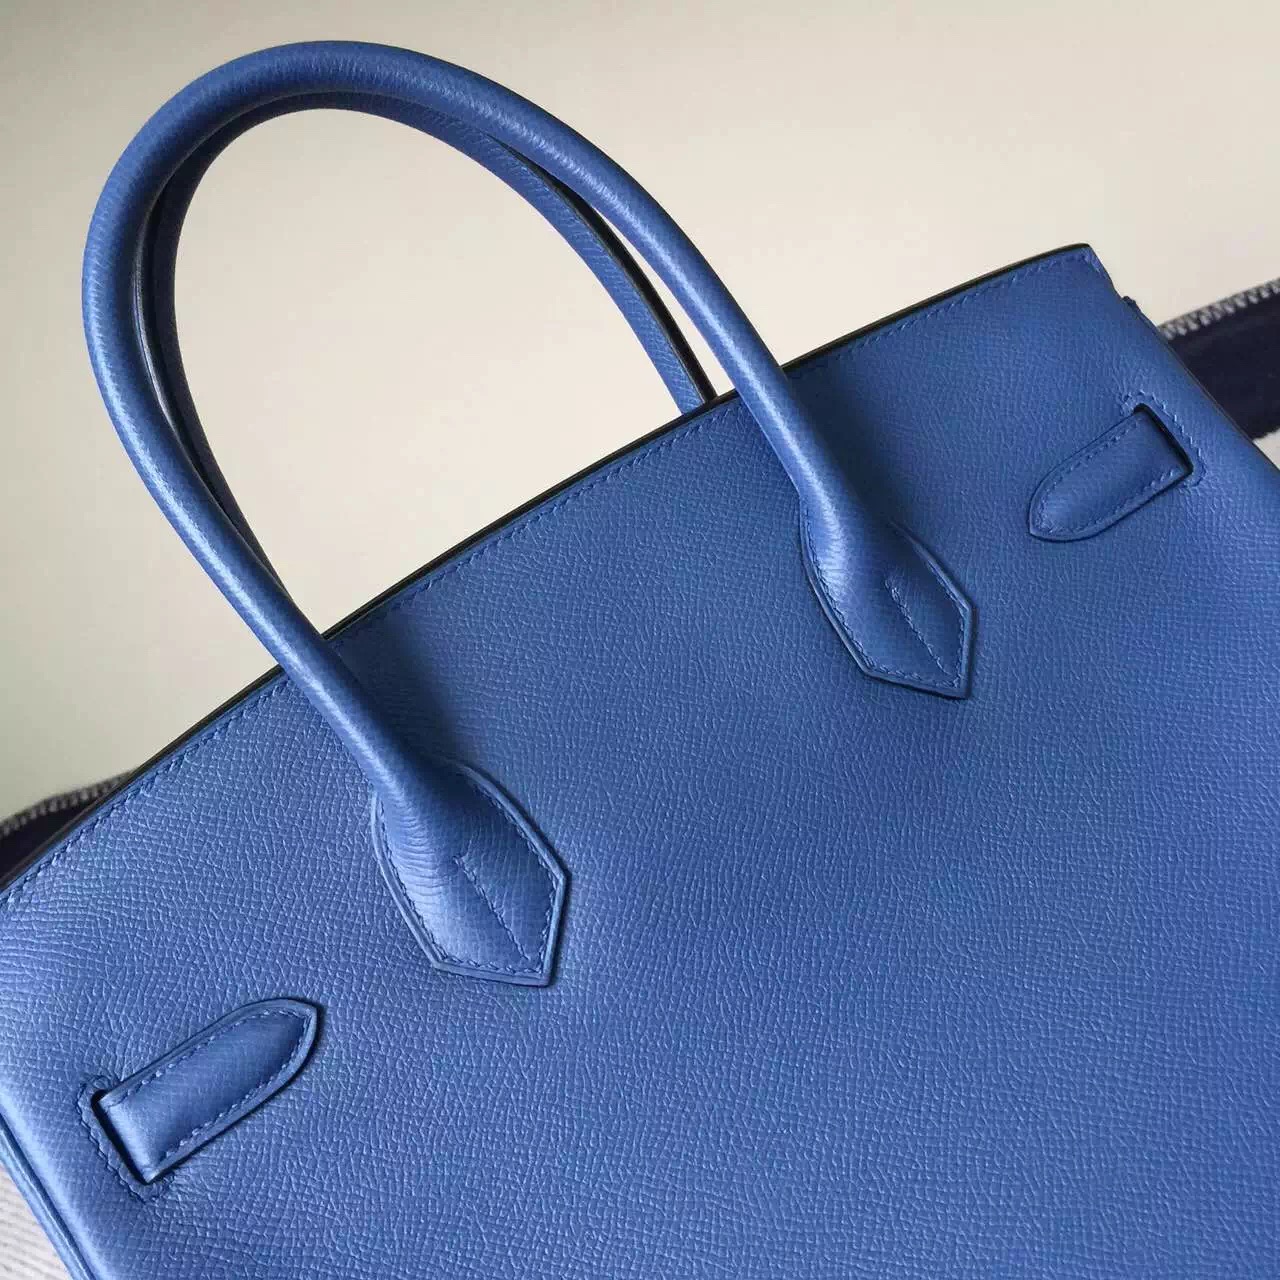 New Arrival Hermes Birkin Bag30cm in R2 Agate Blue Epsom Leather